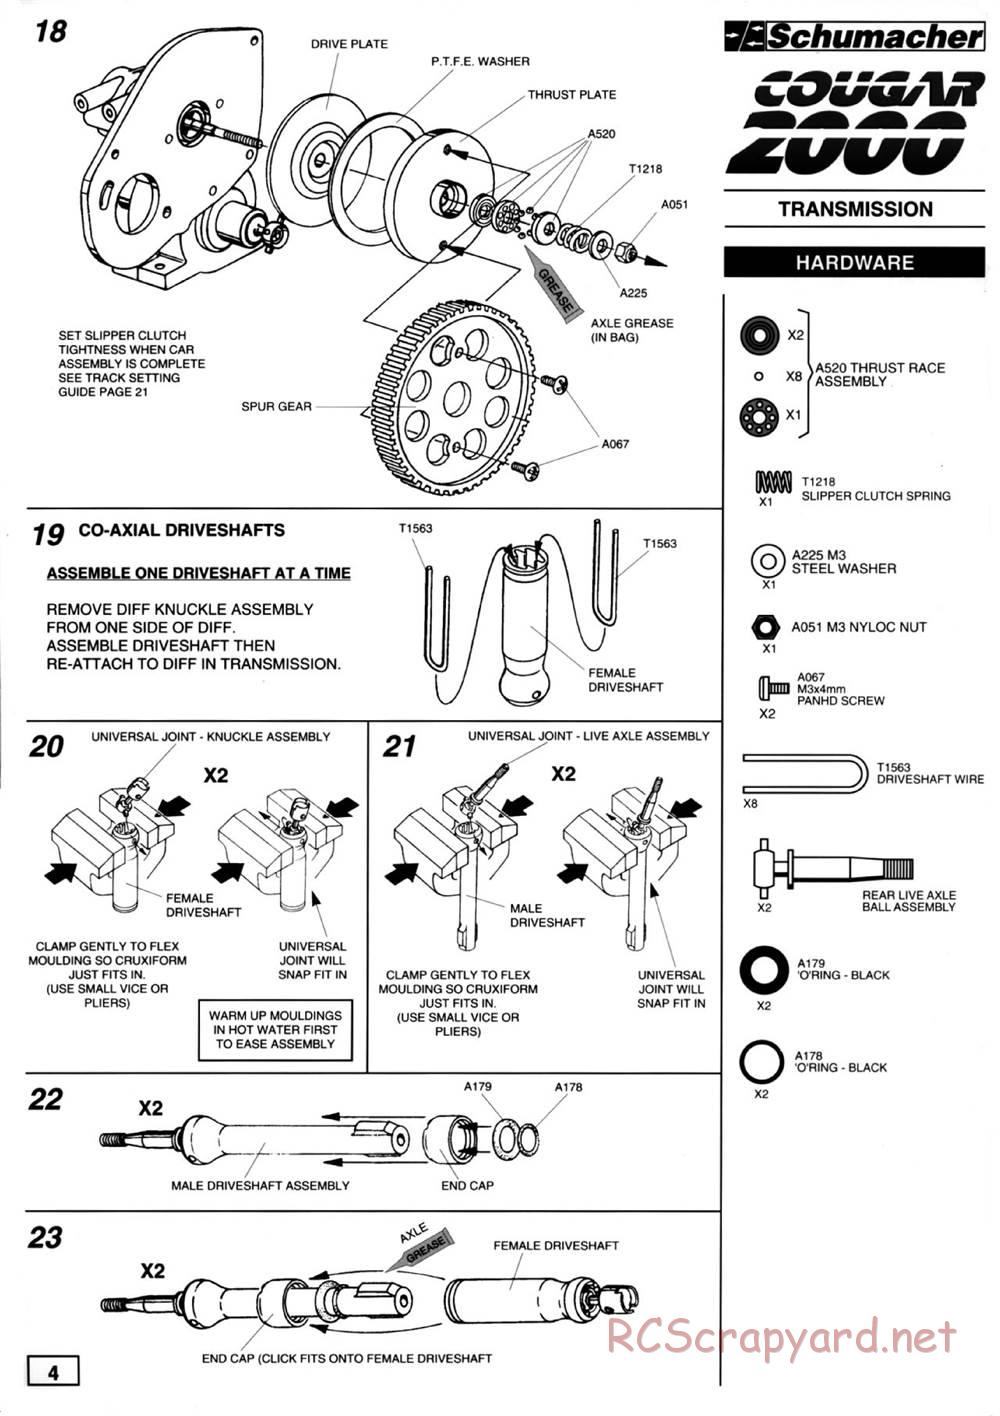 Schumacher - Cougar 2000 - Manual - Page 6